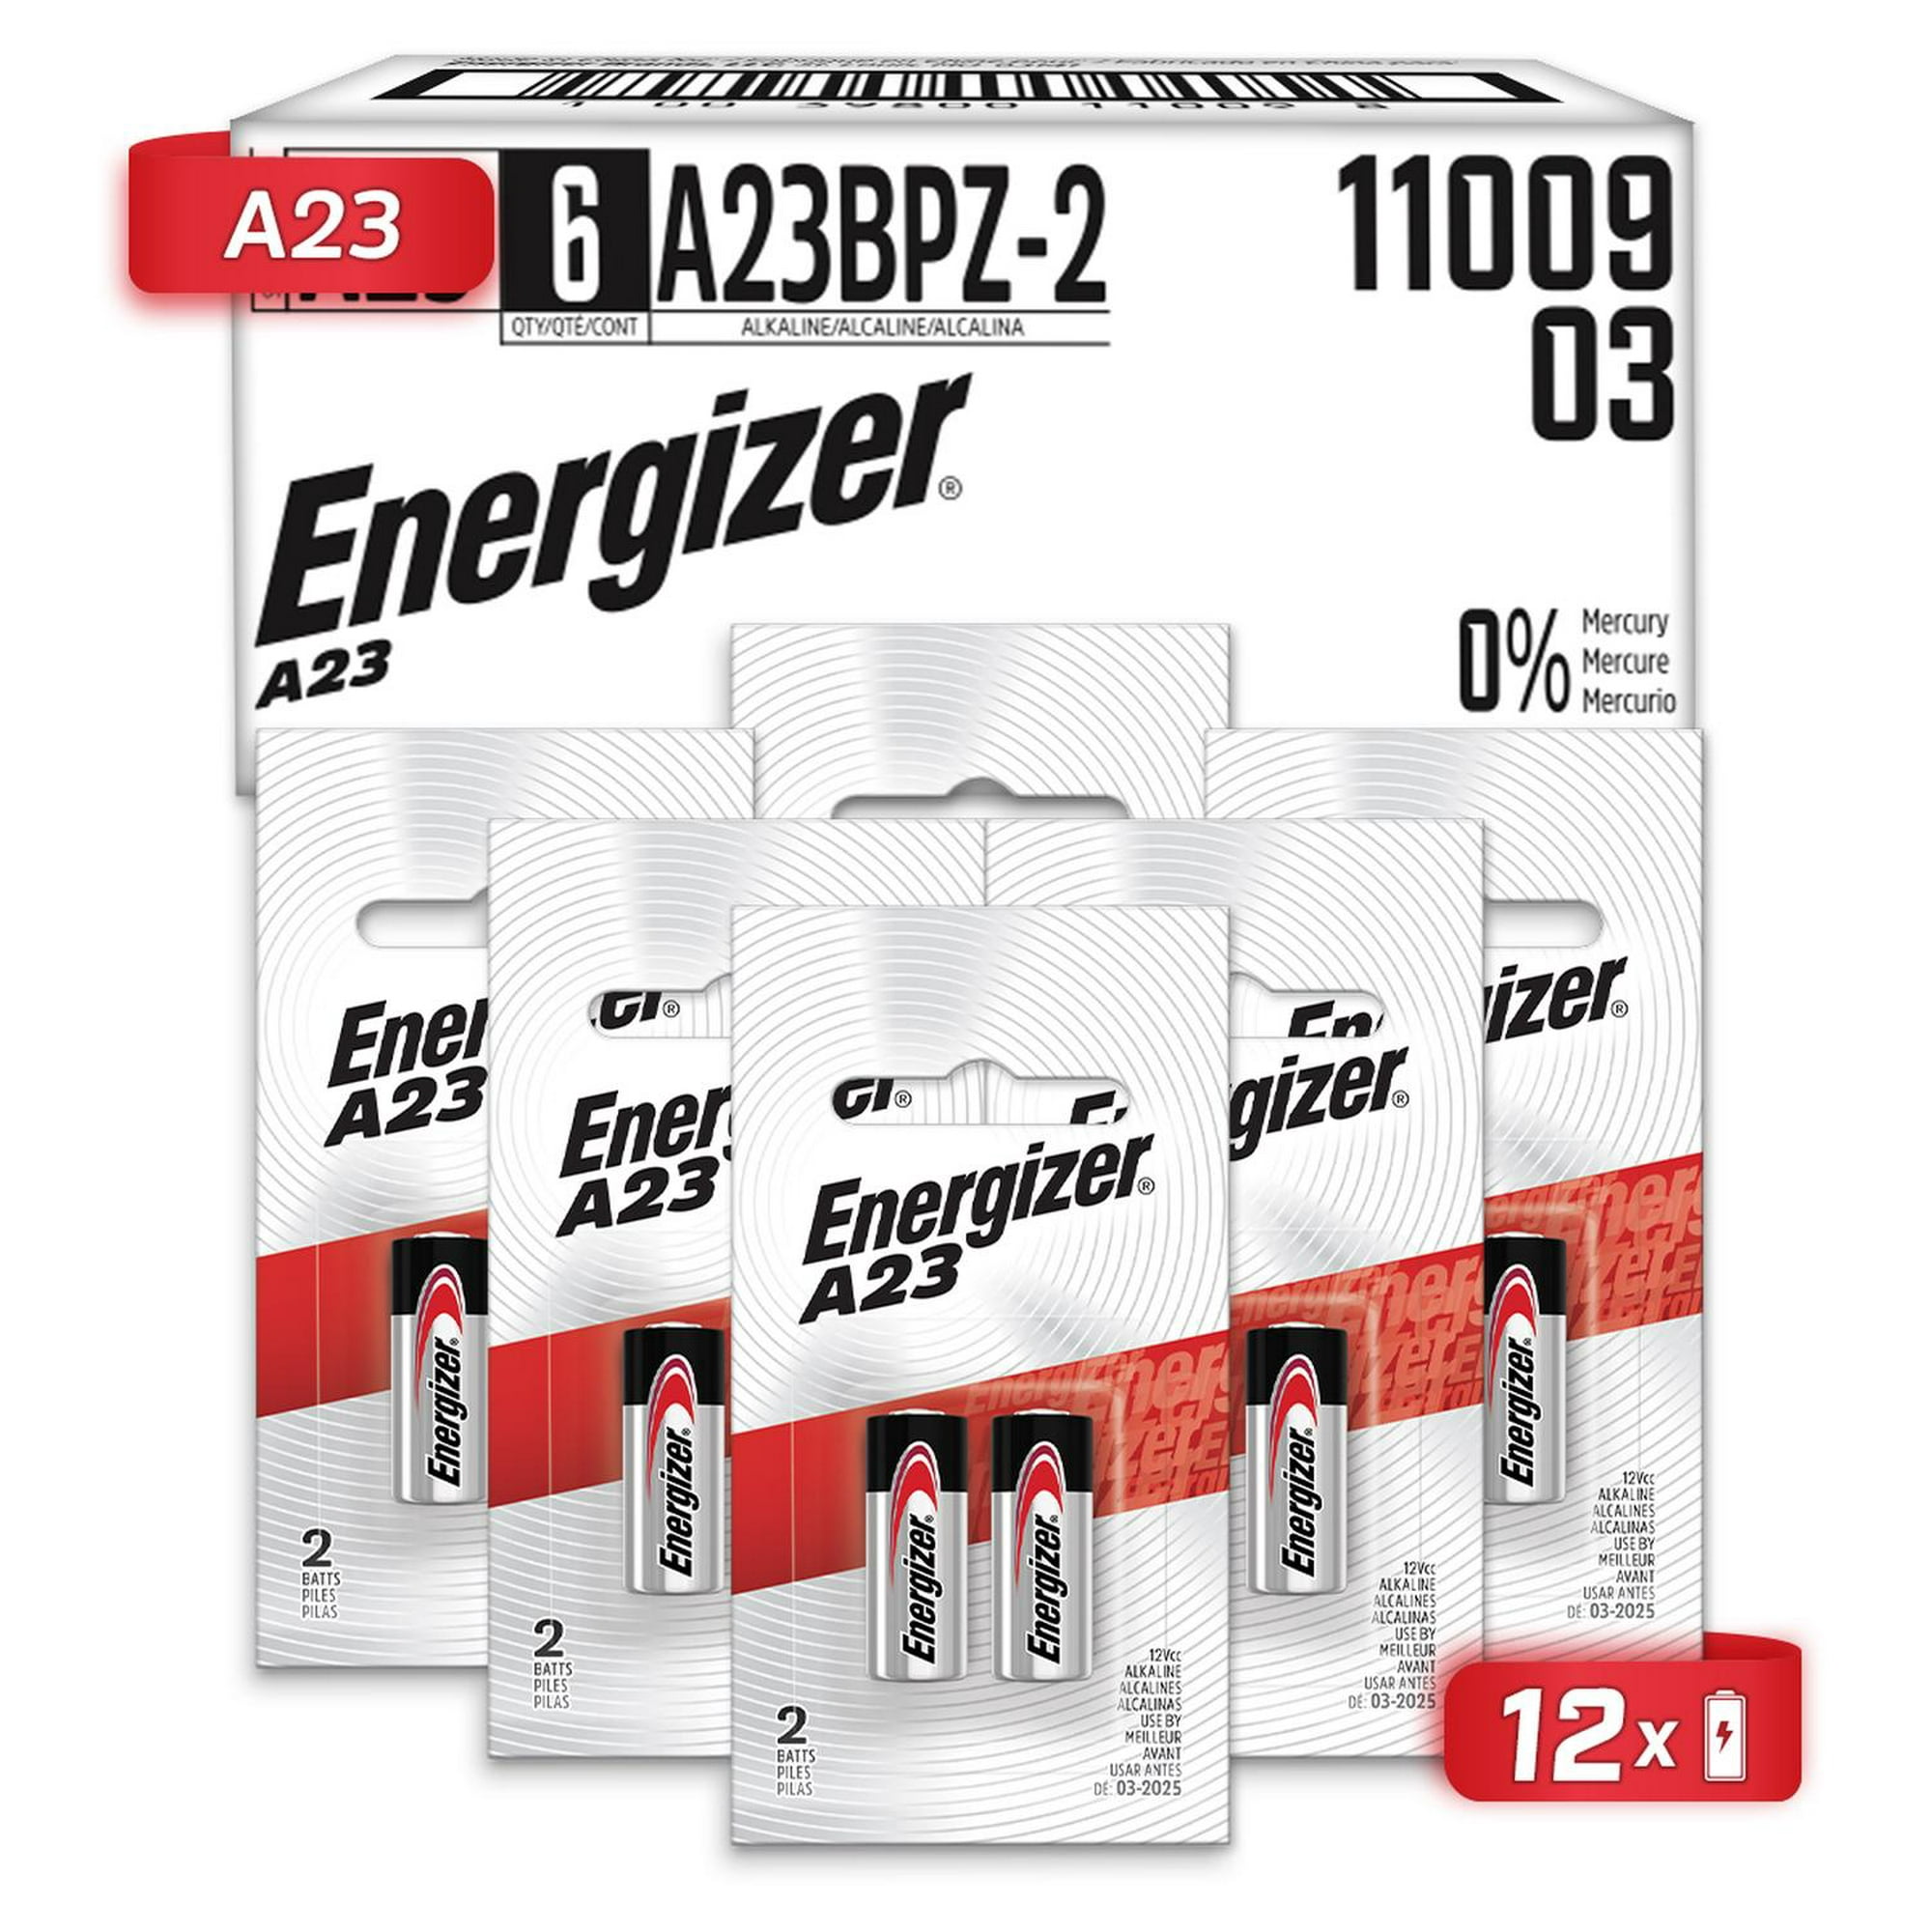 Energizer - Blister pila a23 pip-1 12v / mando cochera / calculadora